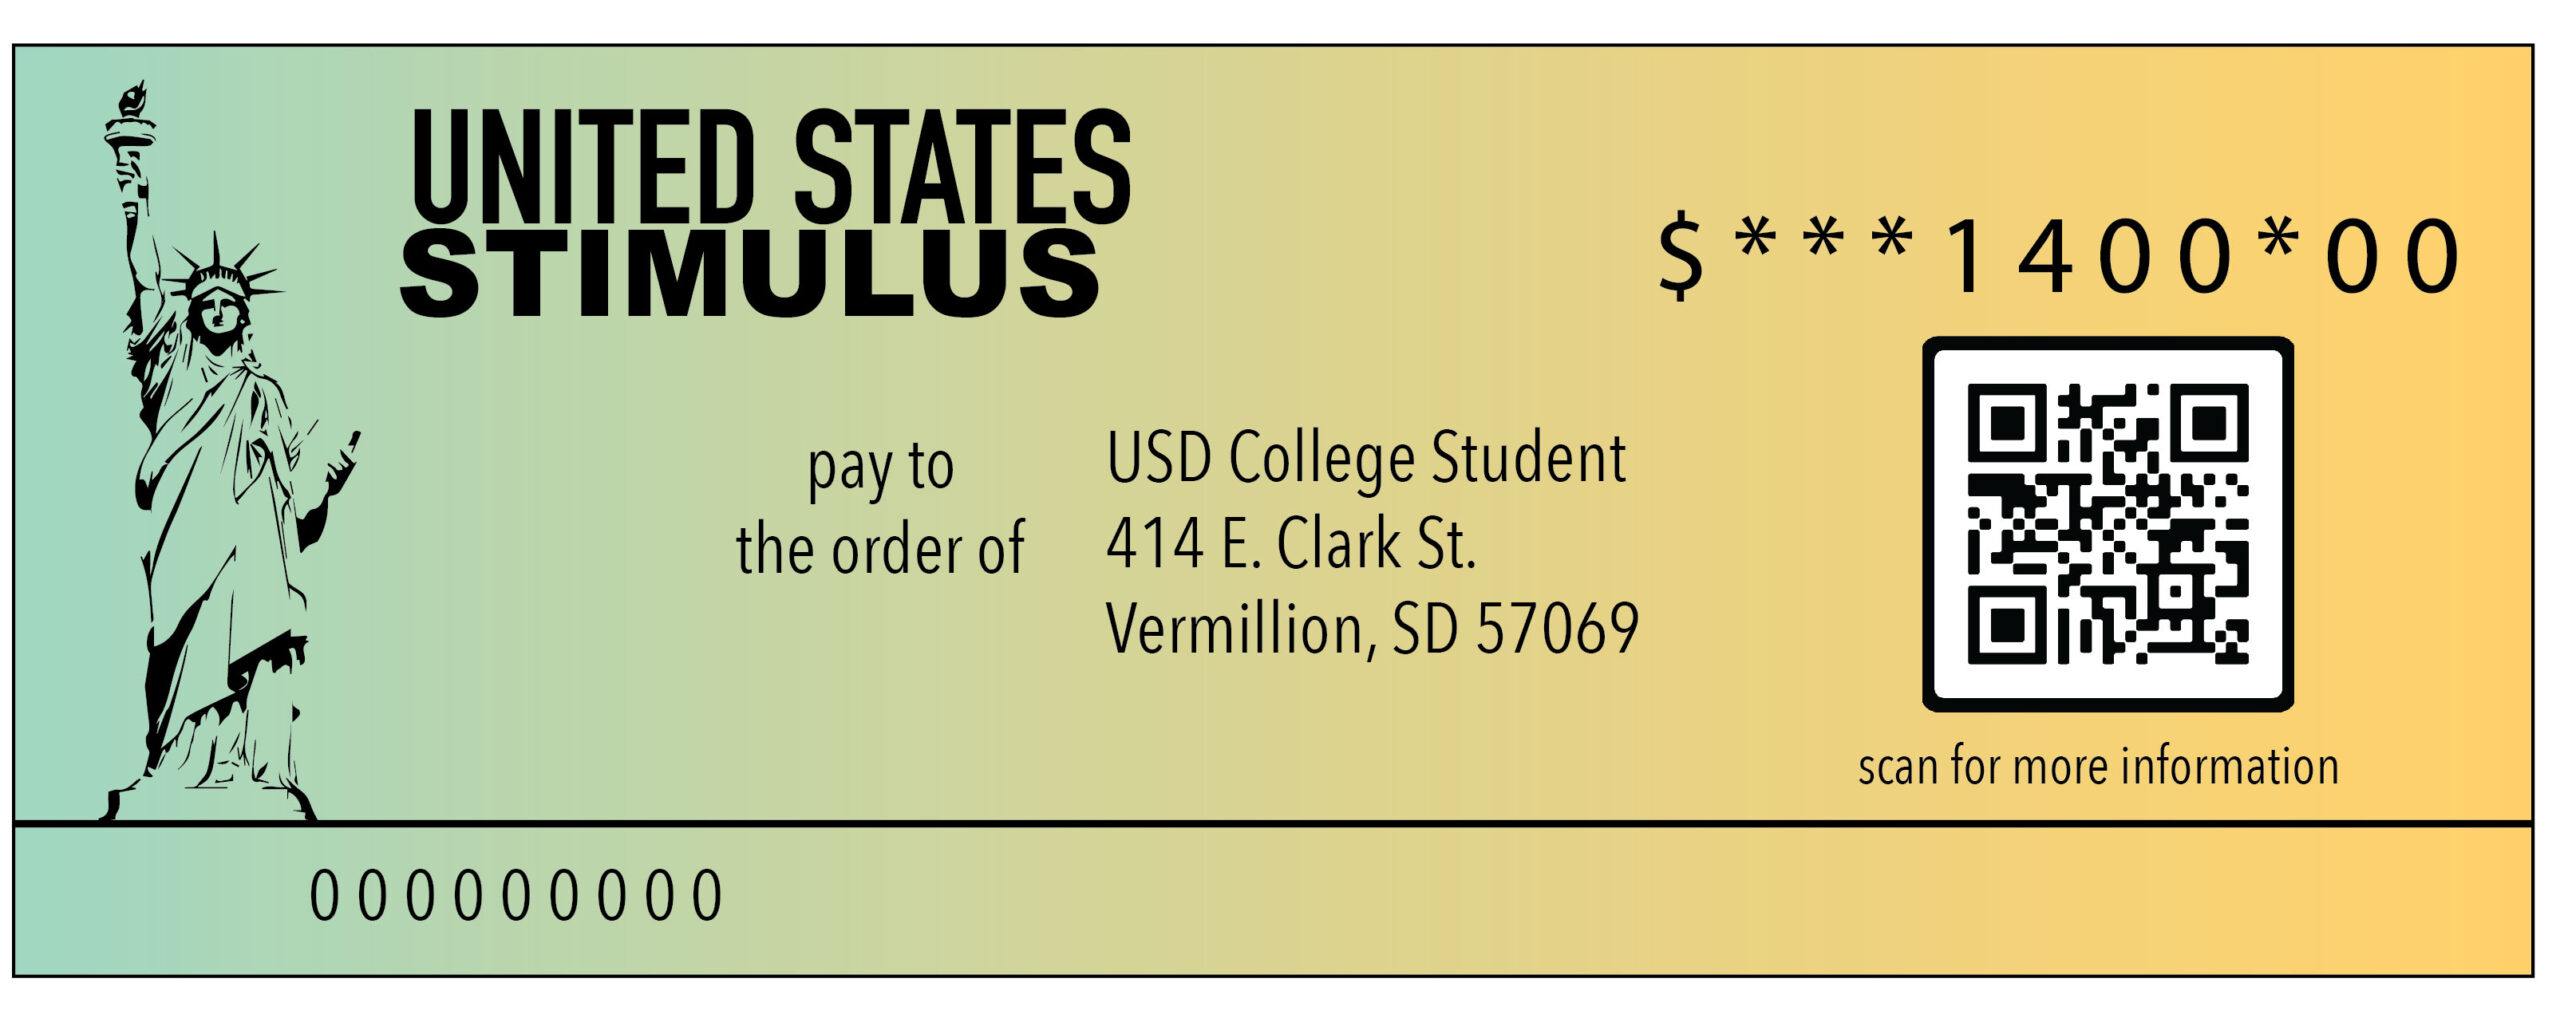 Students deserve stimulus checks, just like everyone else